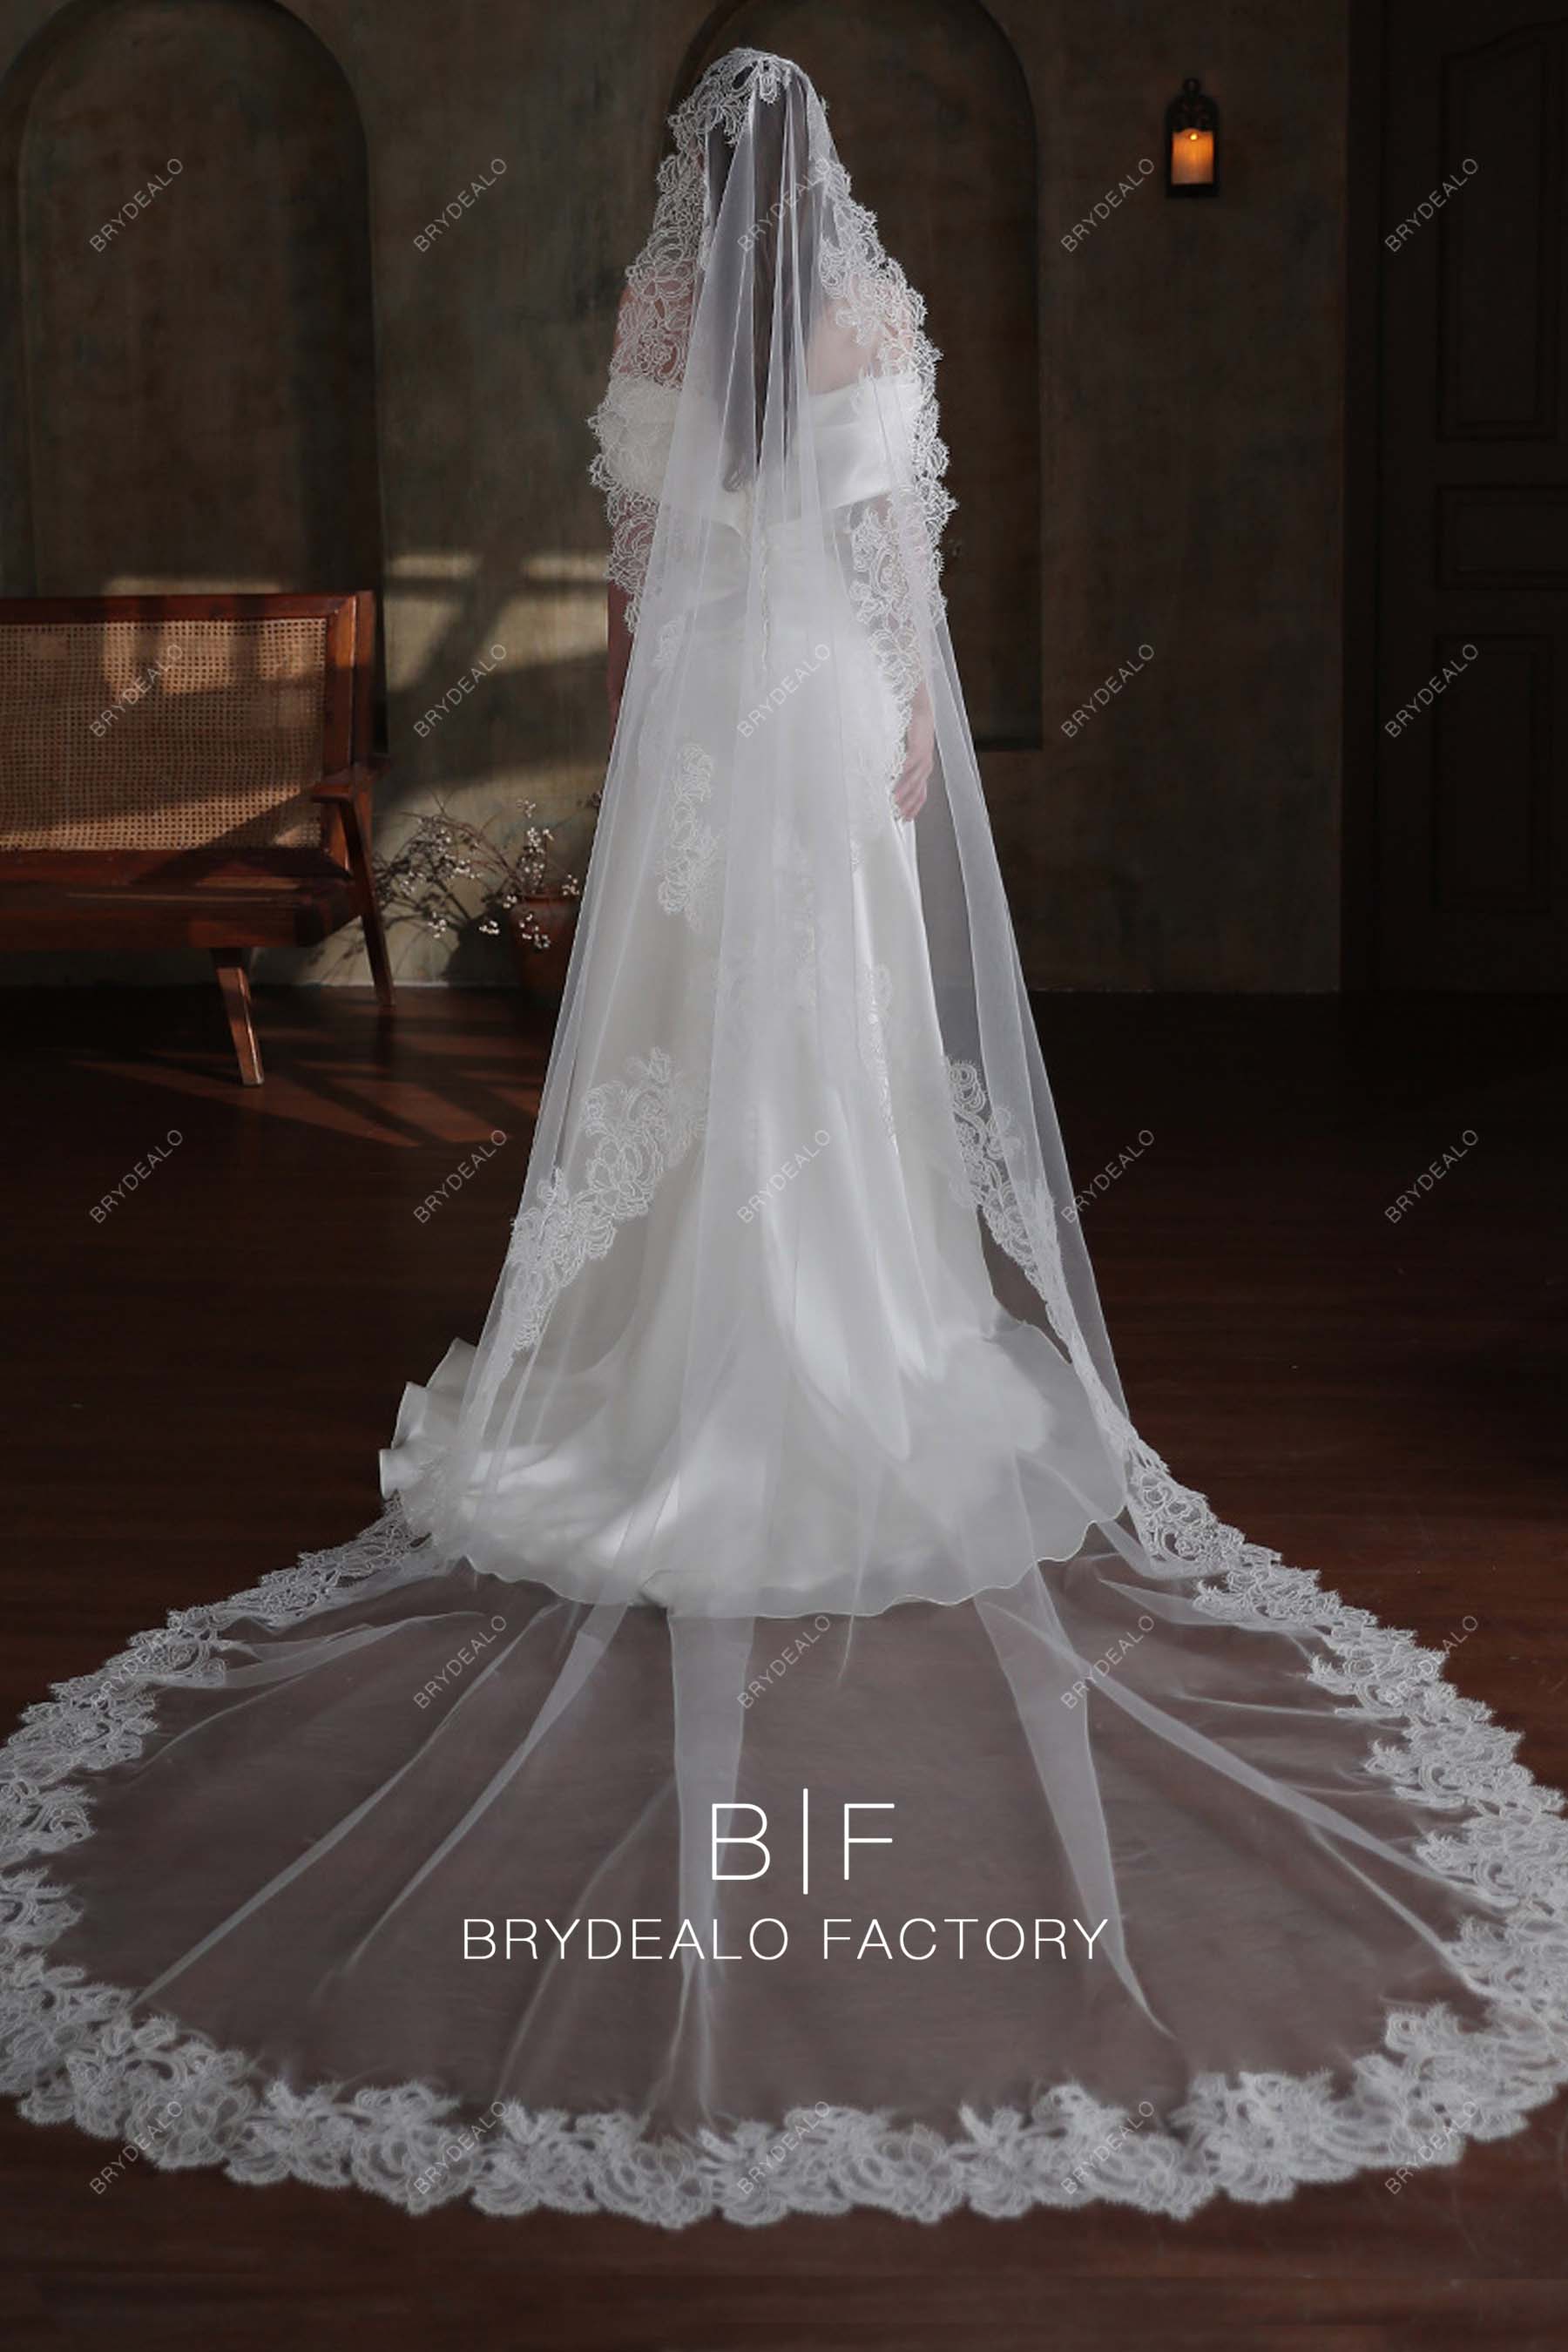 https://cdn.shopify.com/s/files/1/0558/7599/3647/files/Lace-Long-Wedding-Veil-08179.jpg?v=1697015090&width=1800